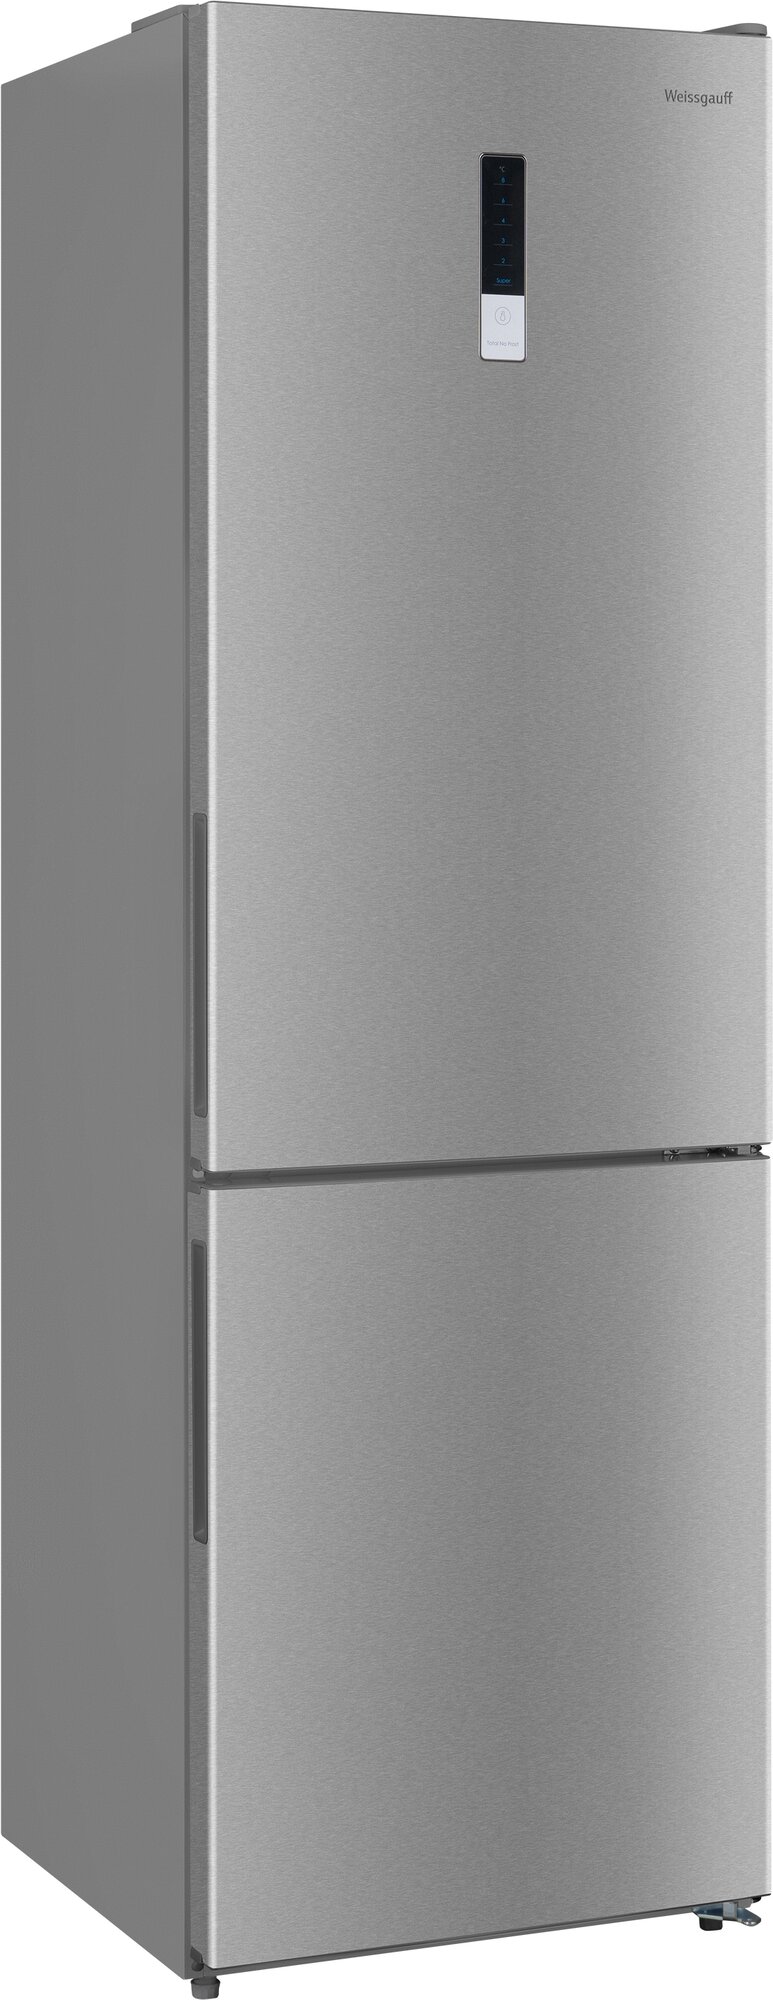 Холодильник Weissgauff WRK 190 DX/DW Total NoFrost